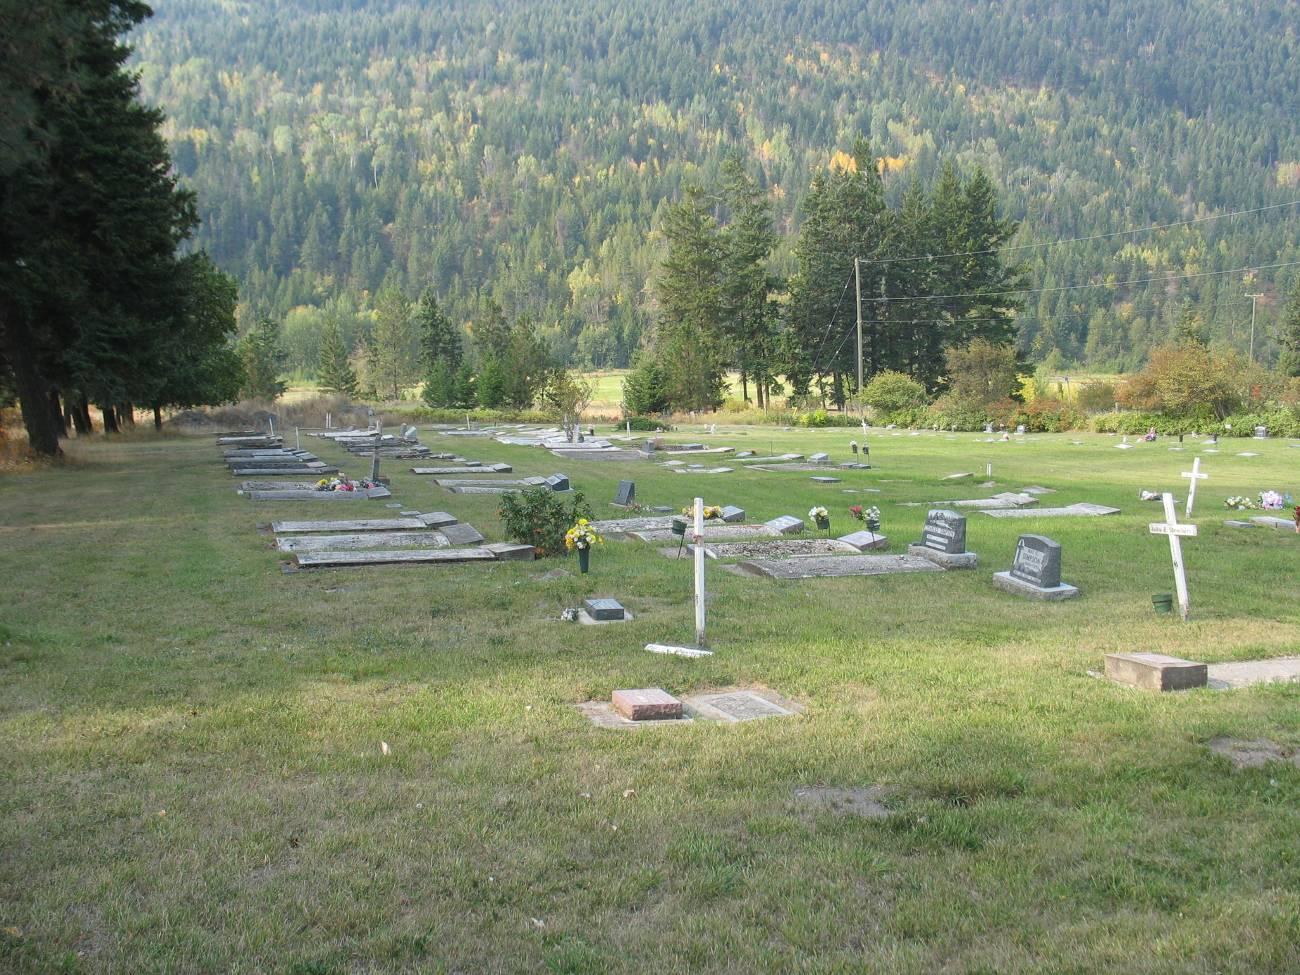 Falkland Cemetery